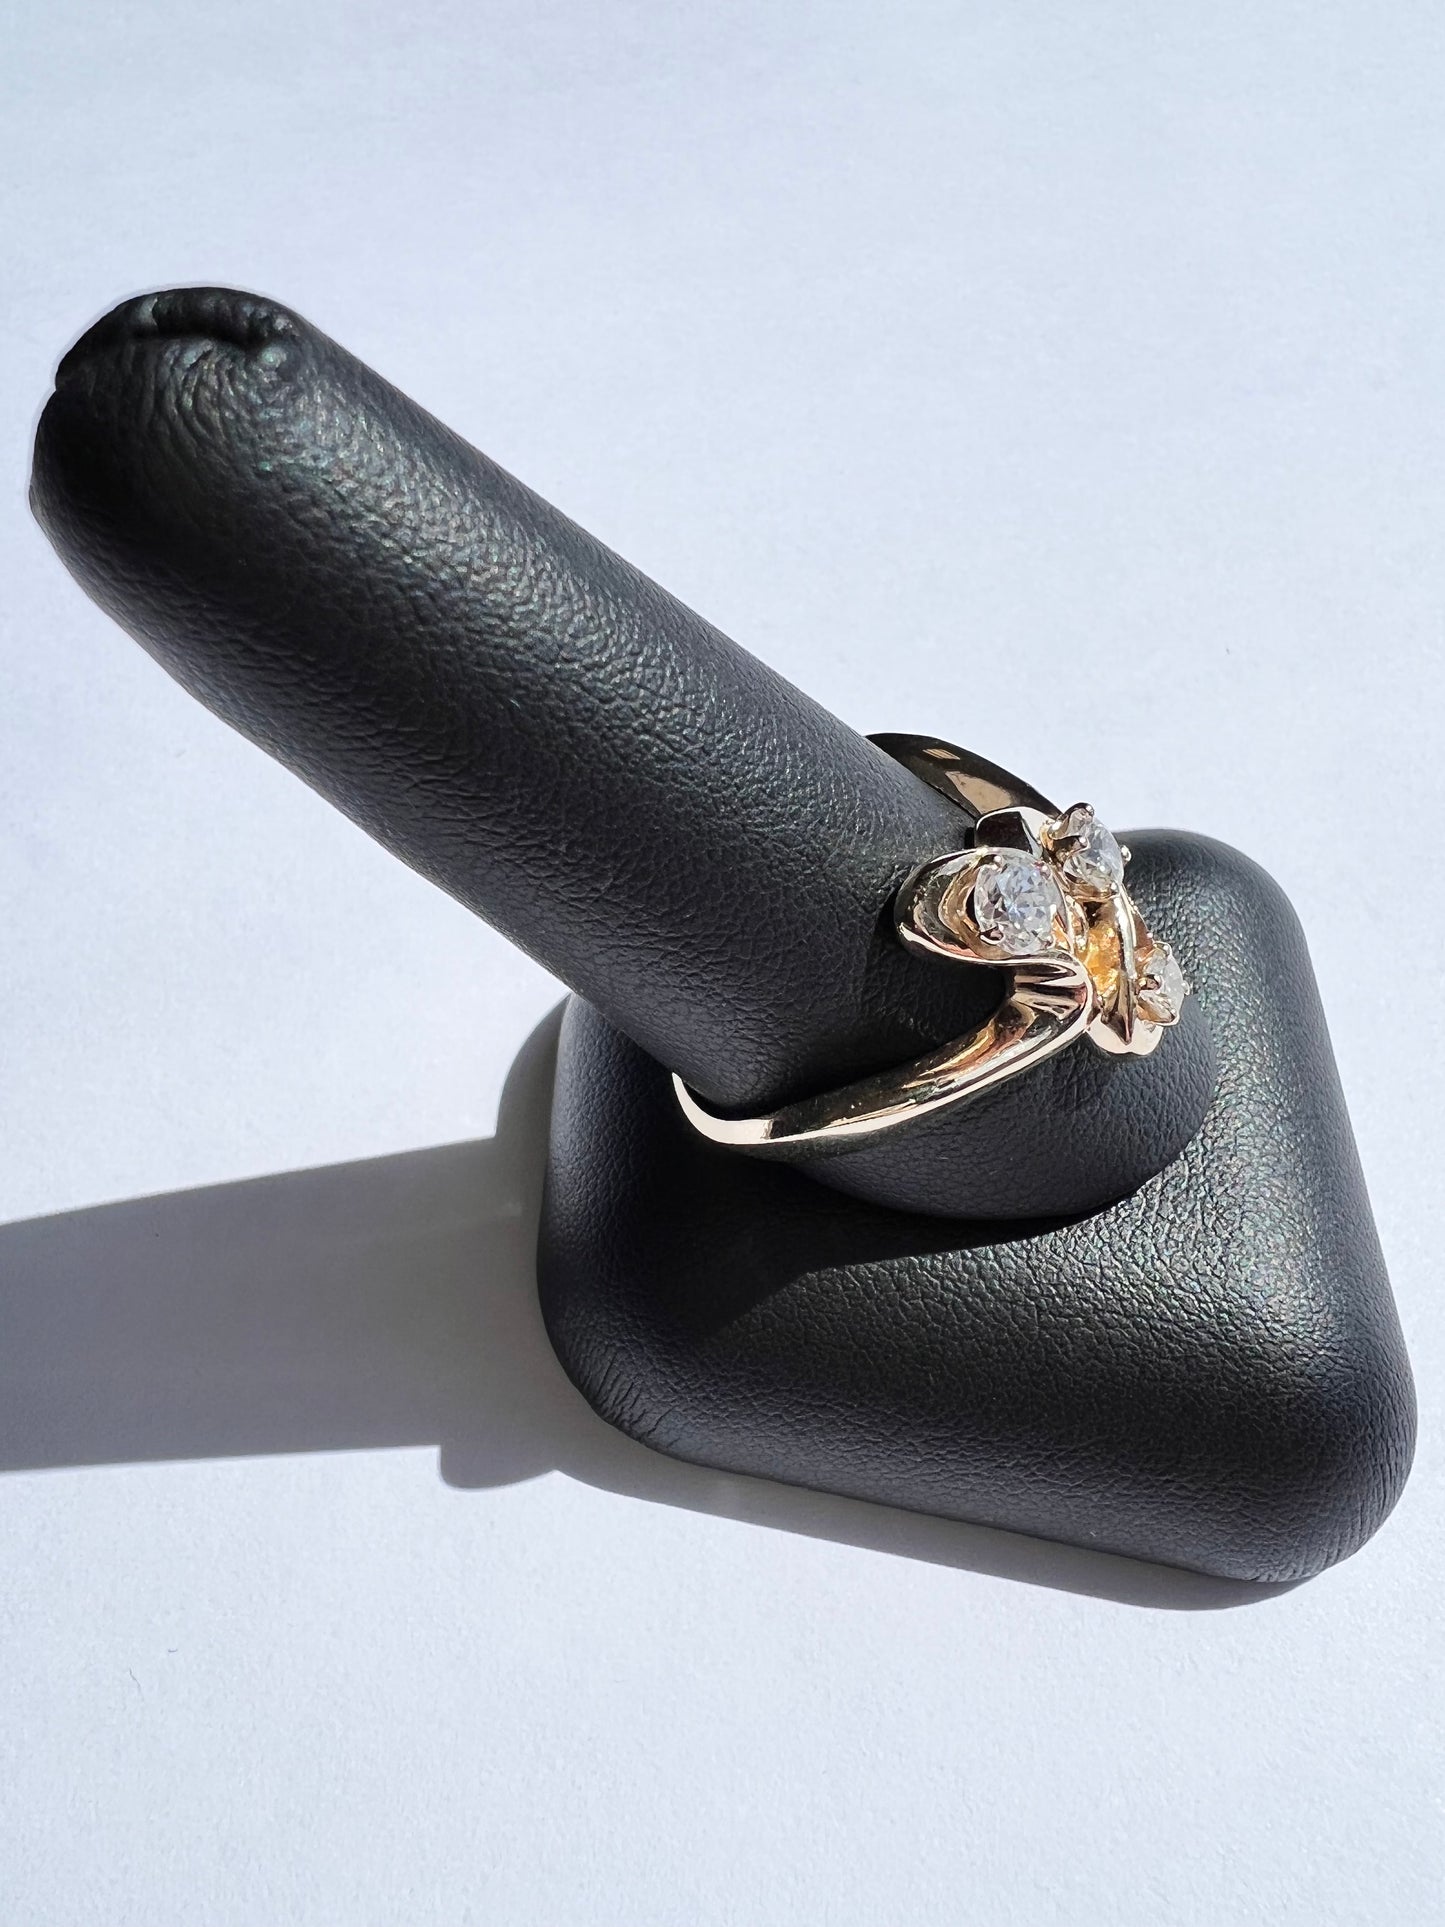 14K Yellow 3 Stone Diamond Ring- Unique Design!